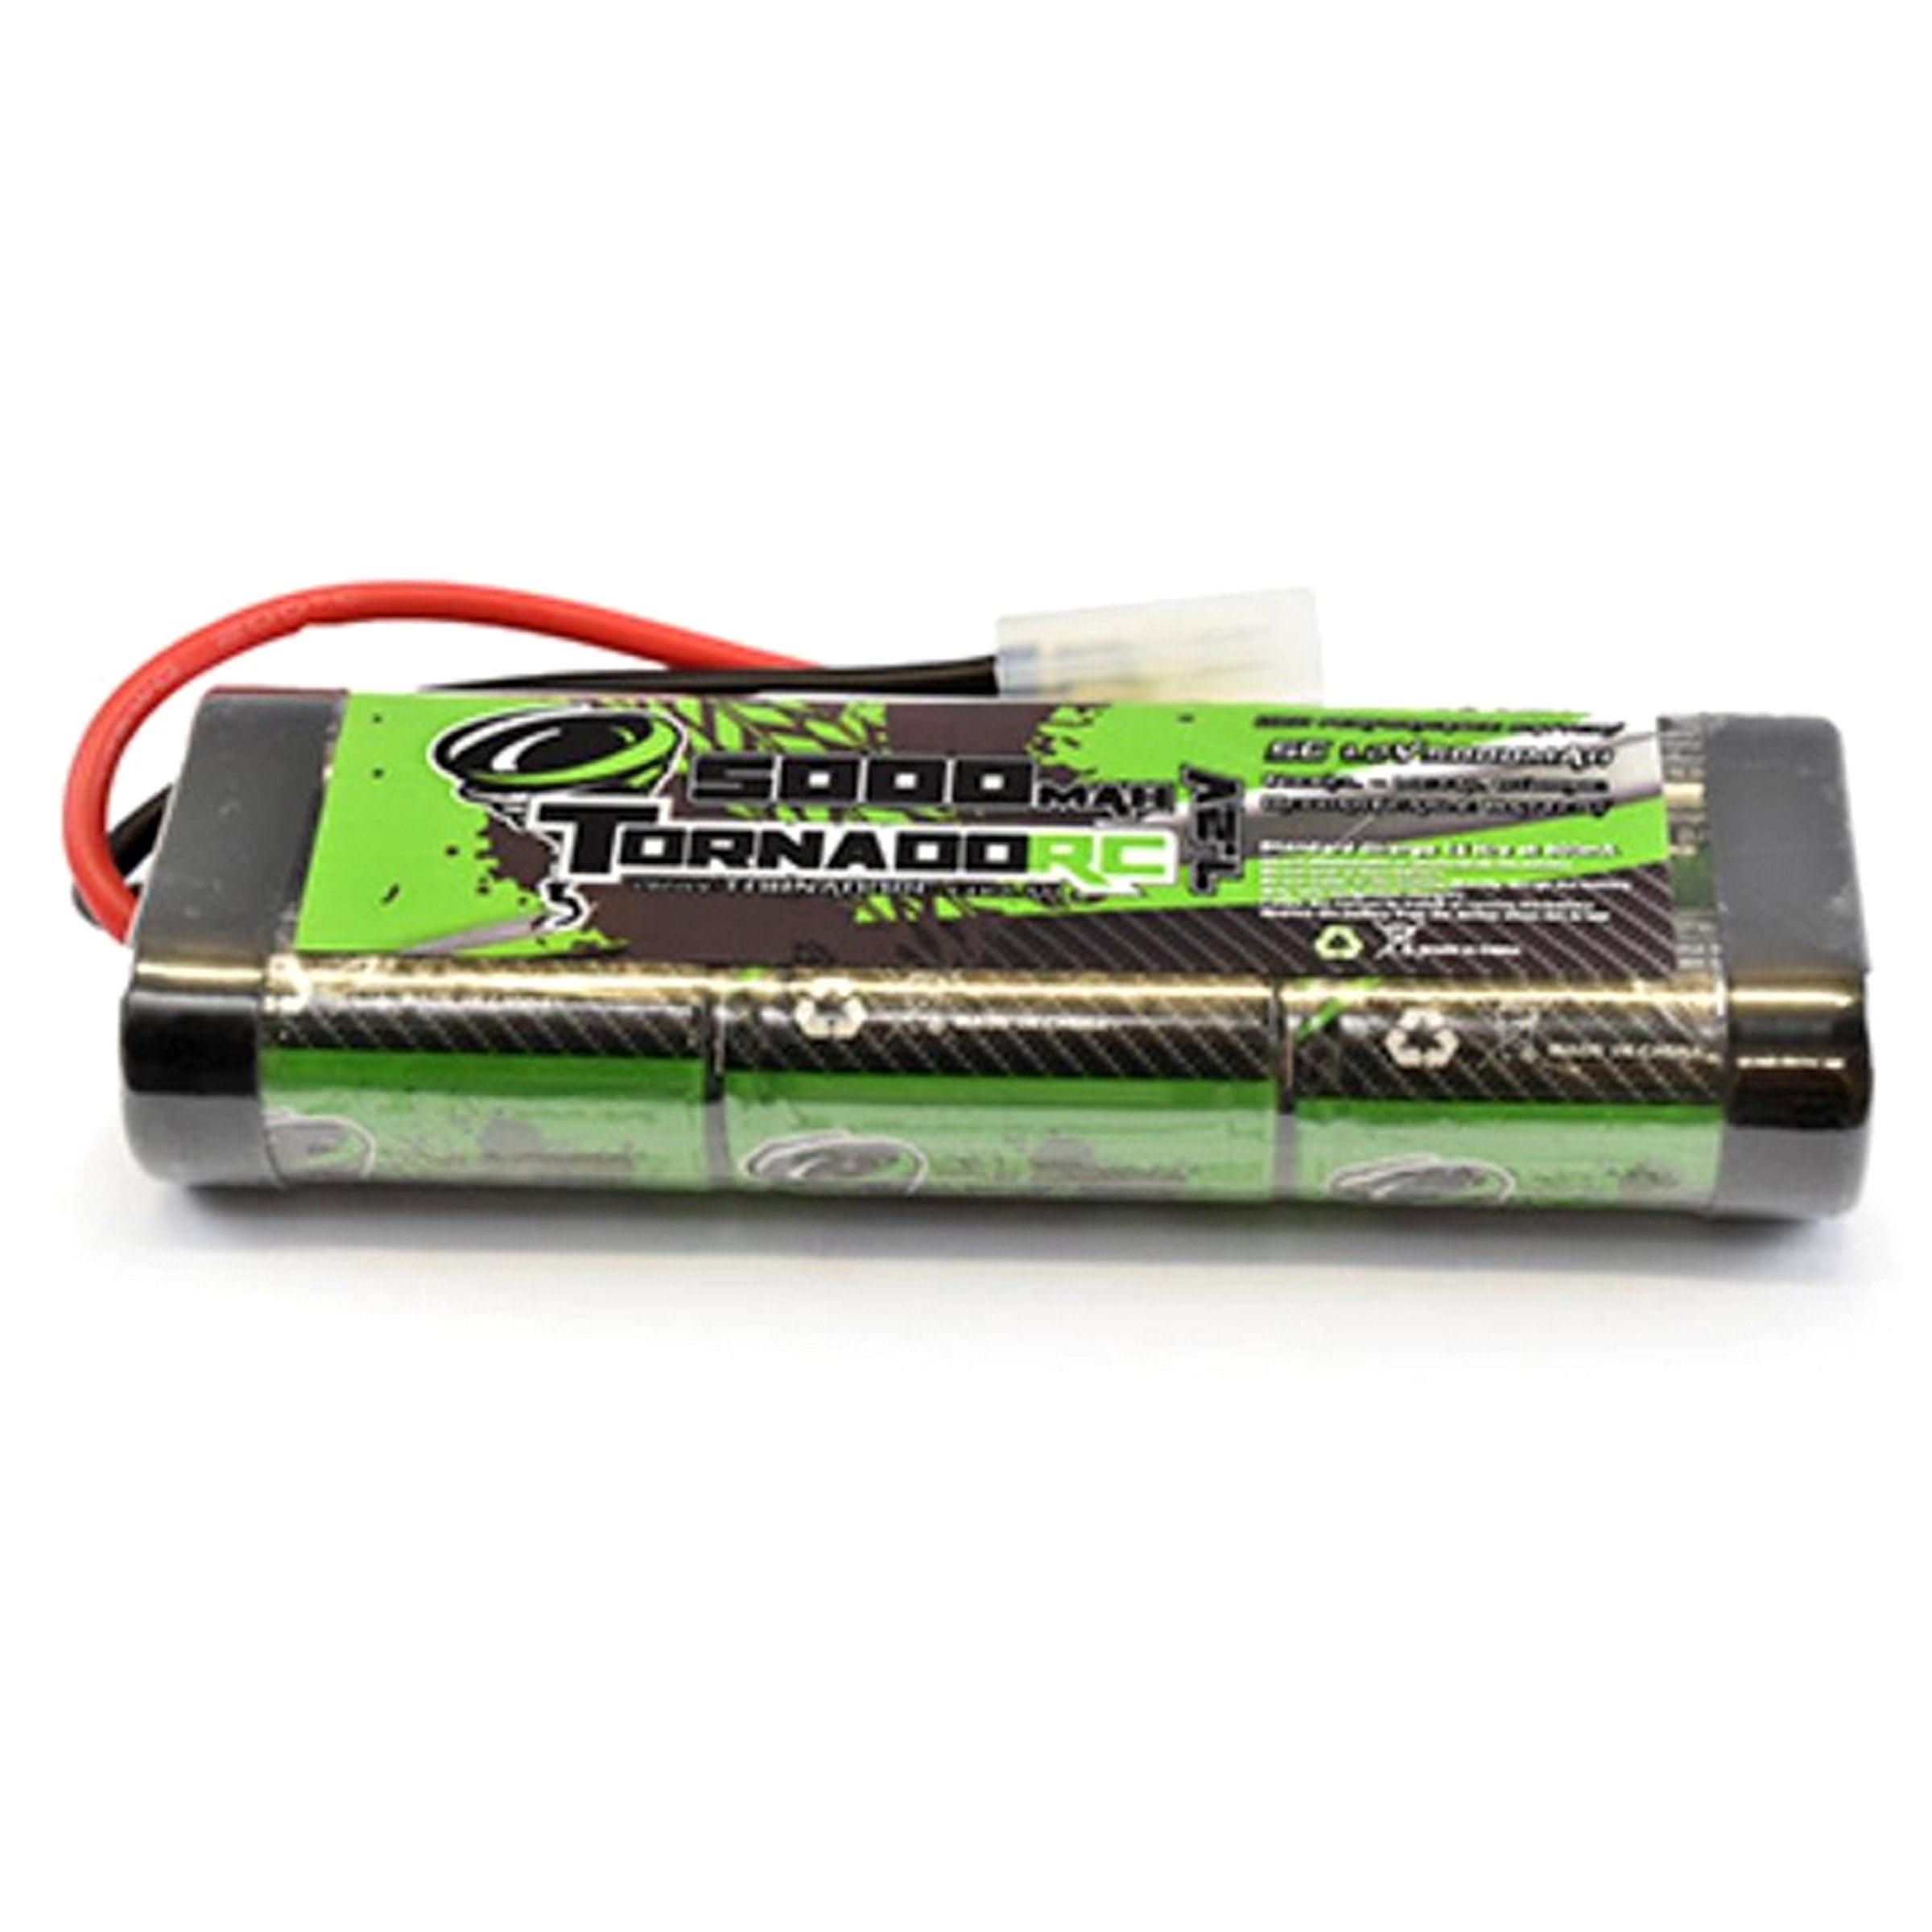 Tornado 7.2v 5000mah Stick Pack Battery For RC Radio Control Car - Tamiya Connector Deals499